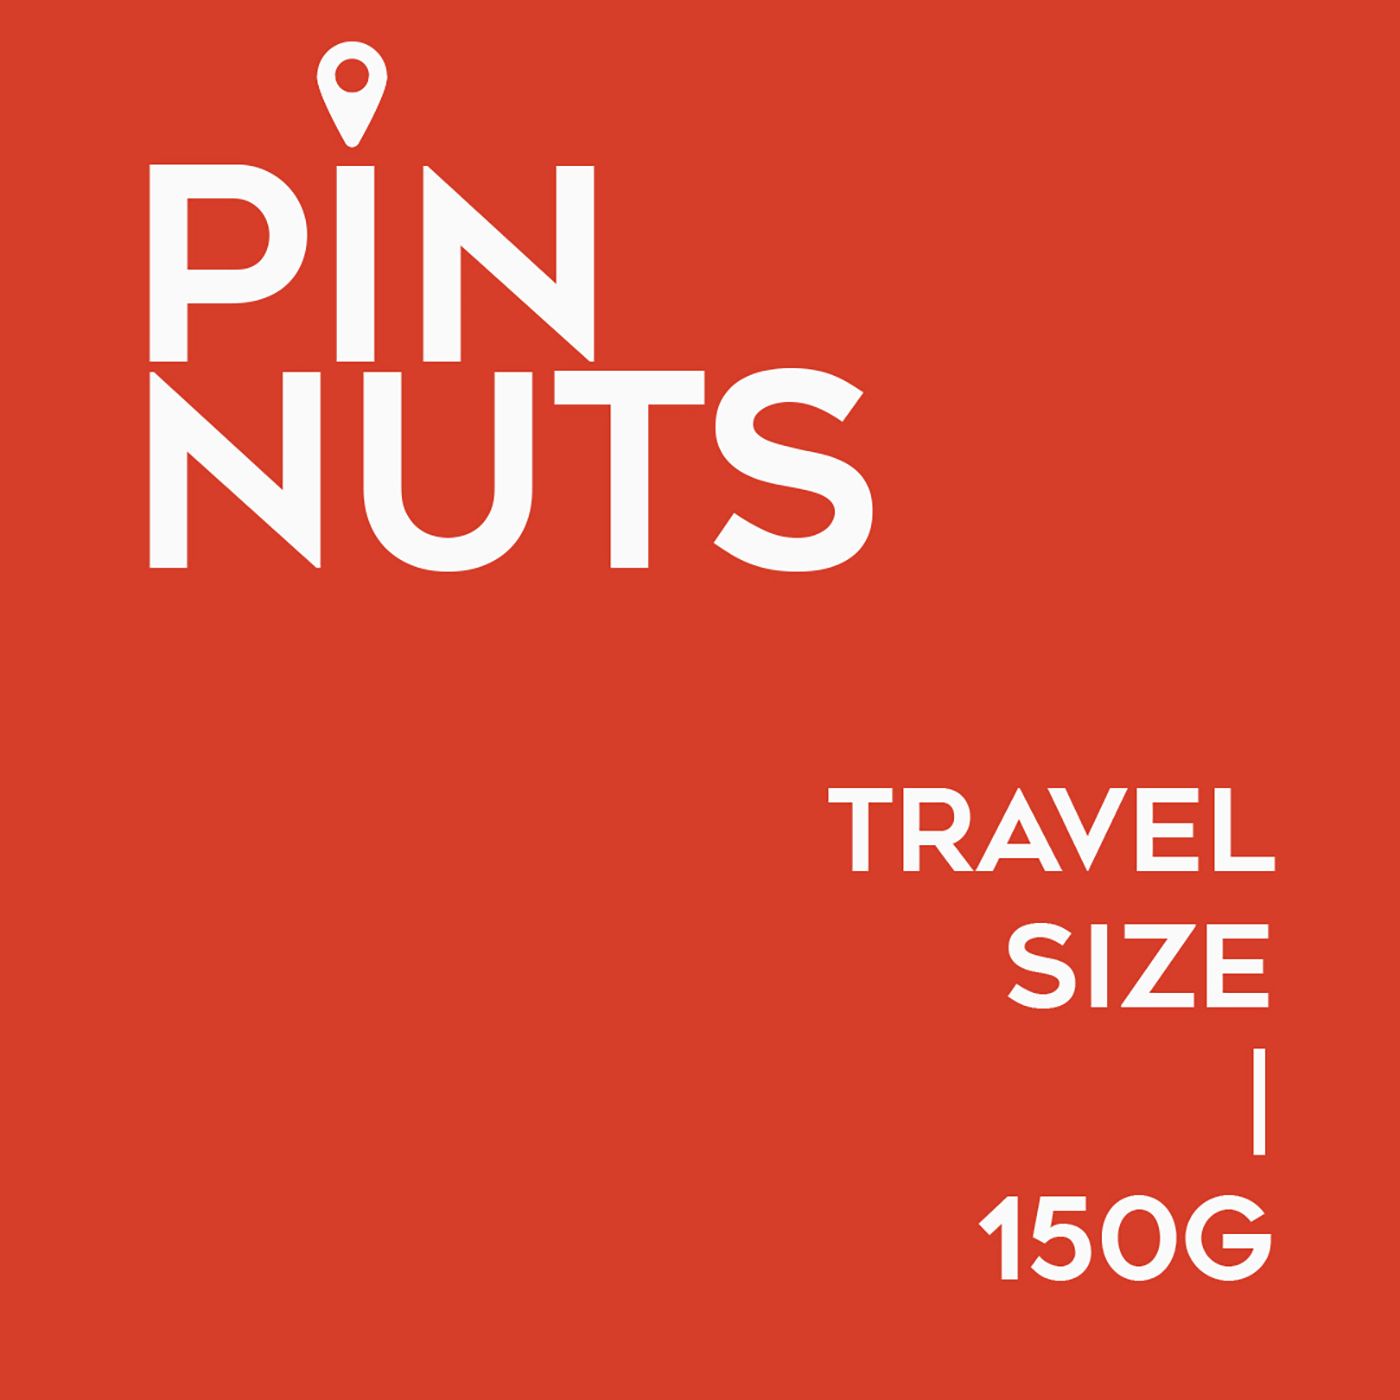 Pin on Travel